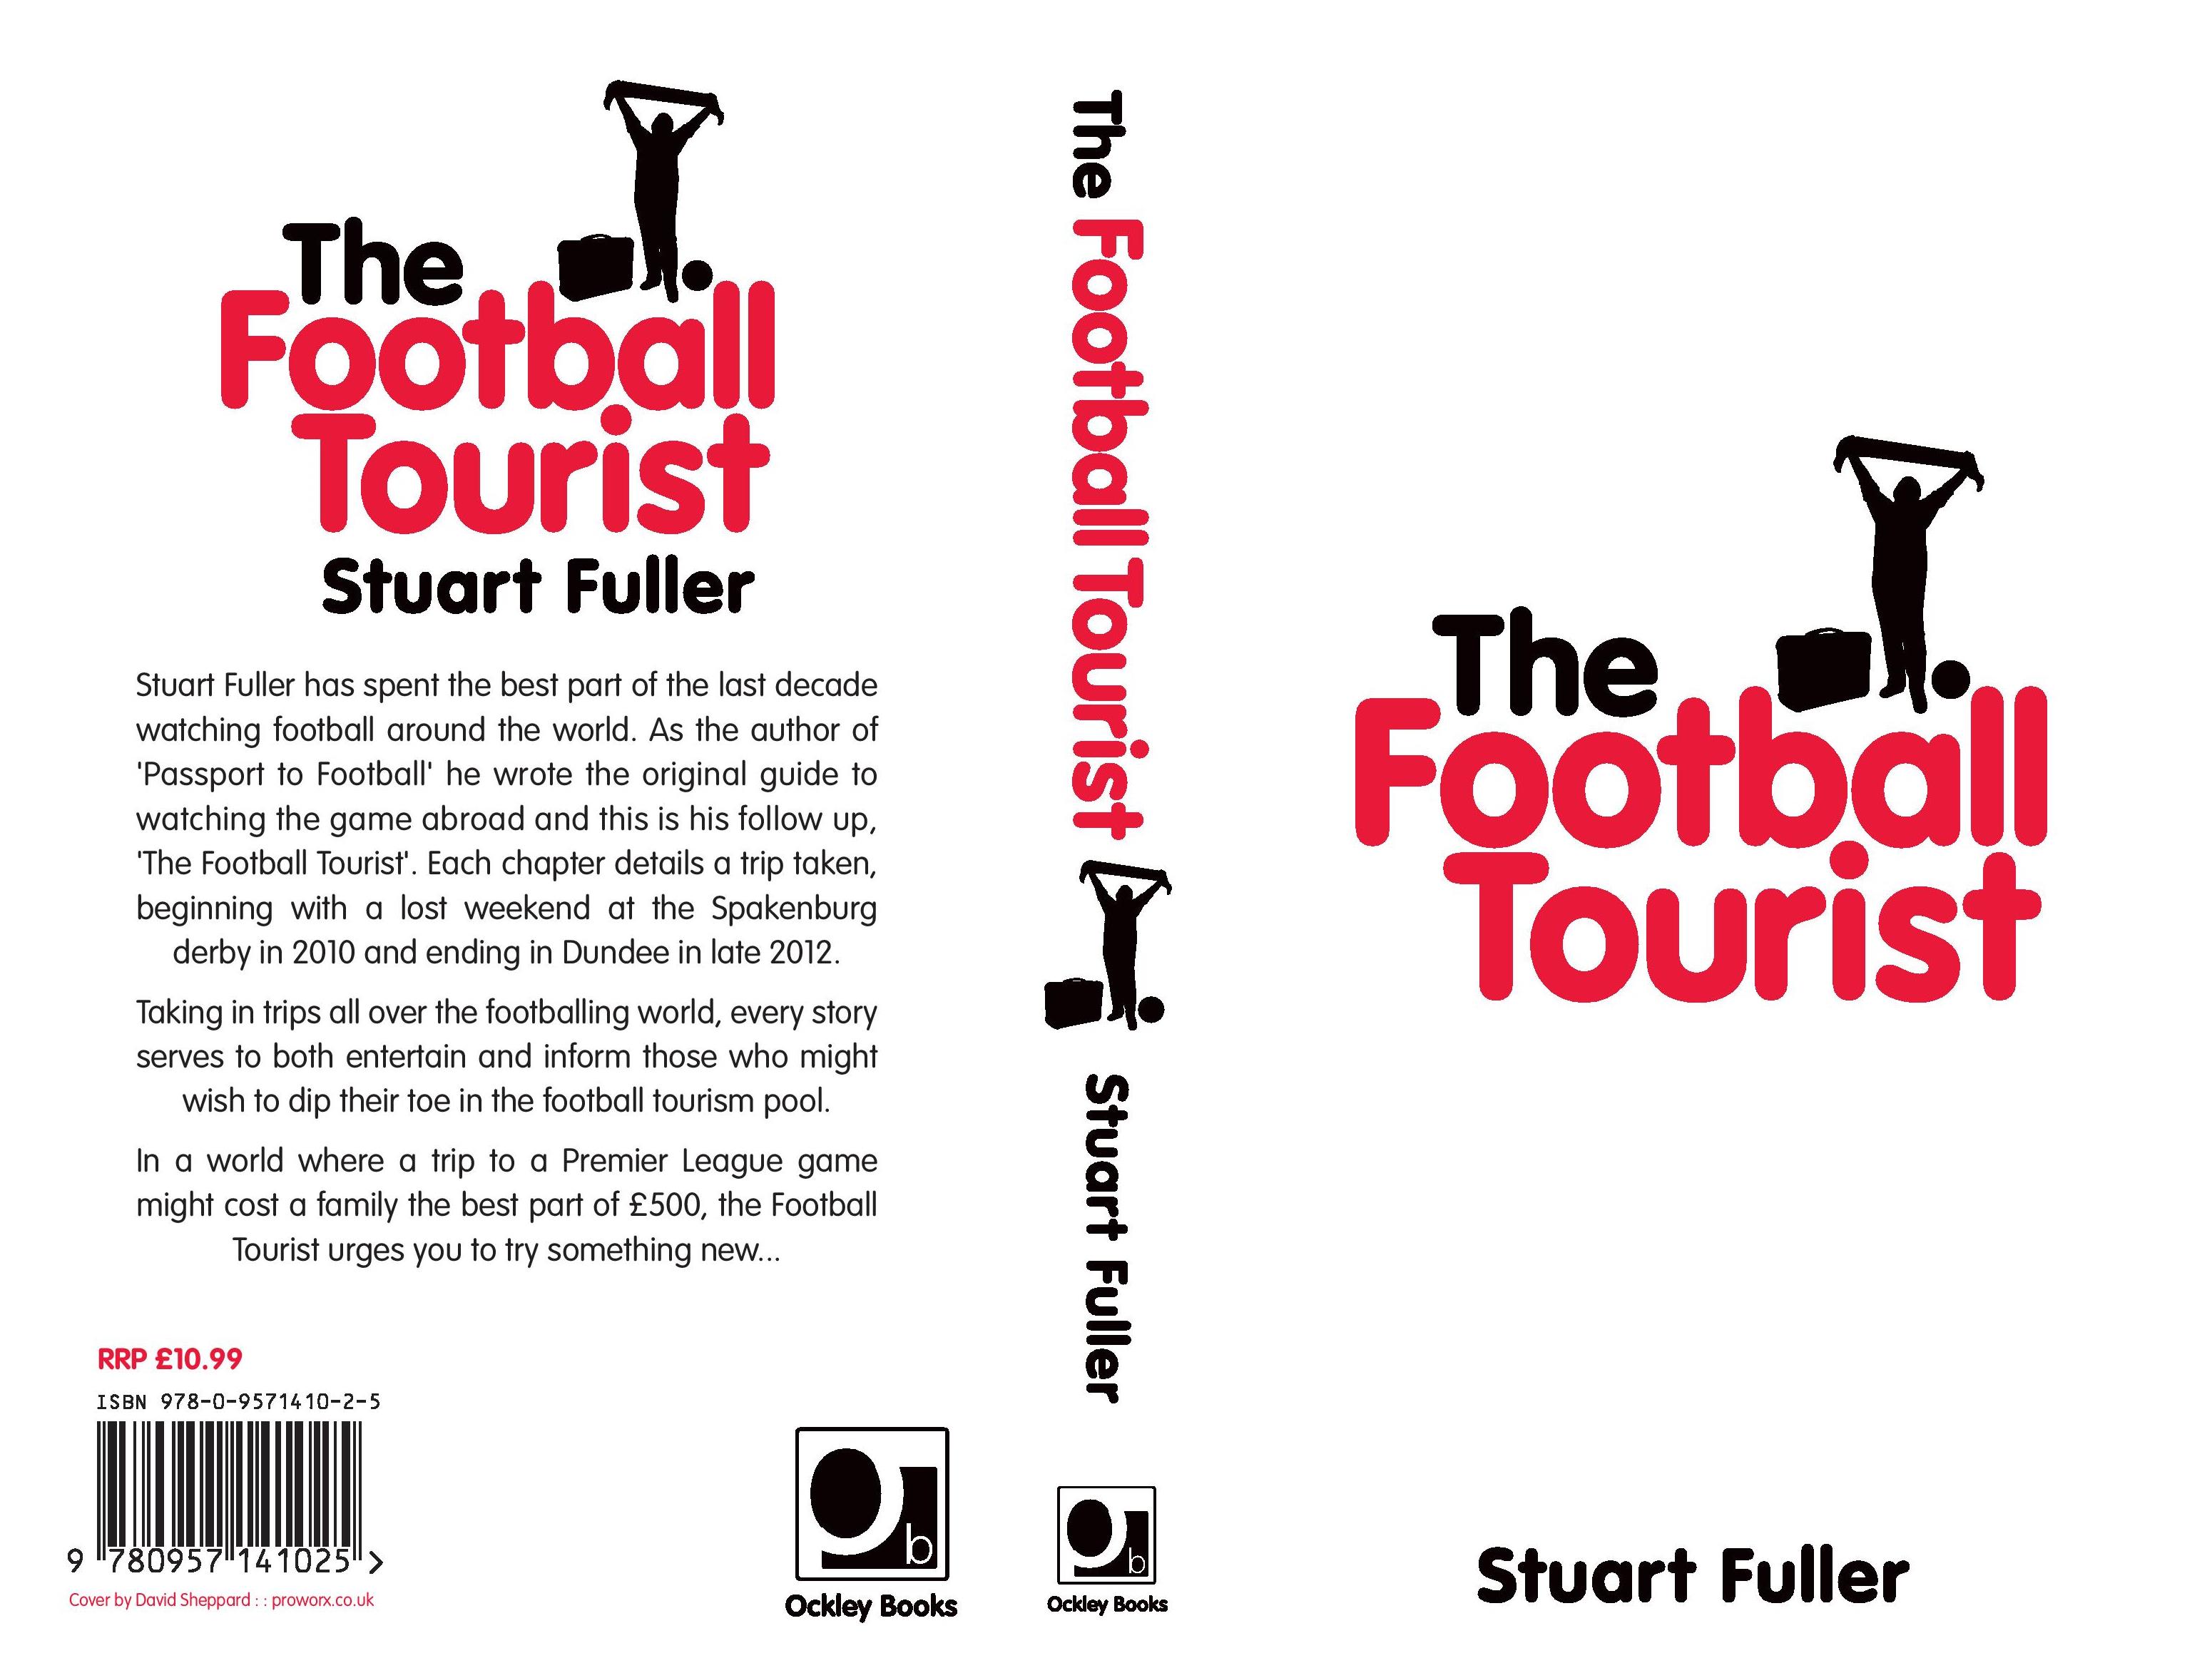 http://stuartnoel.files.wordpress.com/2013/08/the-football-tourist-cover_aw-page-001.jpg